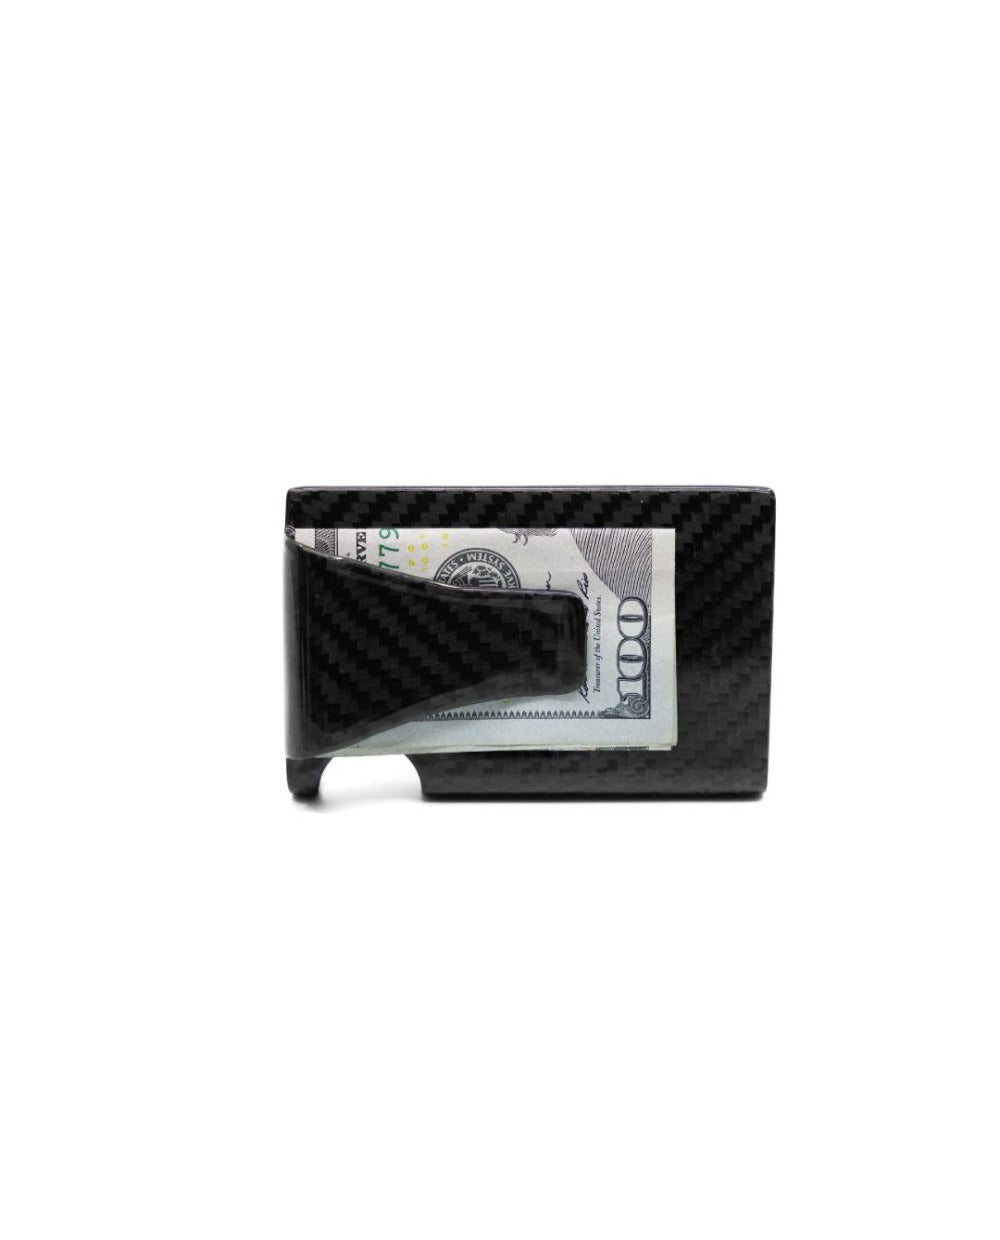 Carbon Fiber Money Clip & Card Wallet